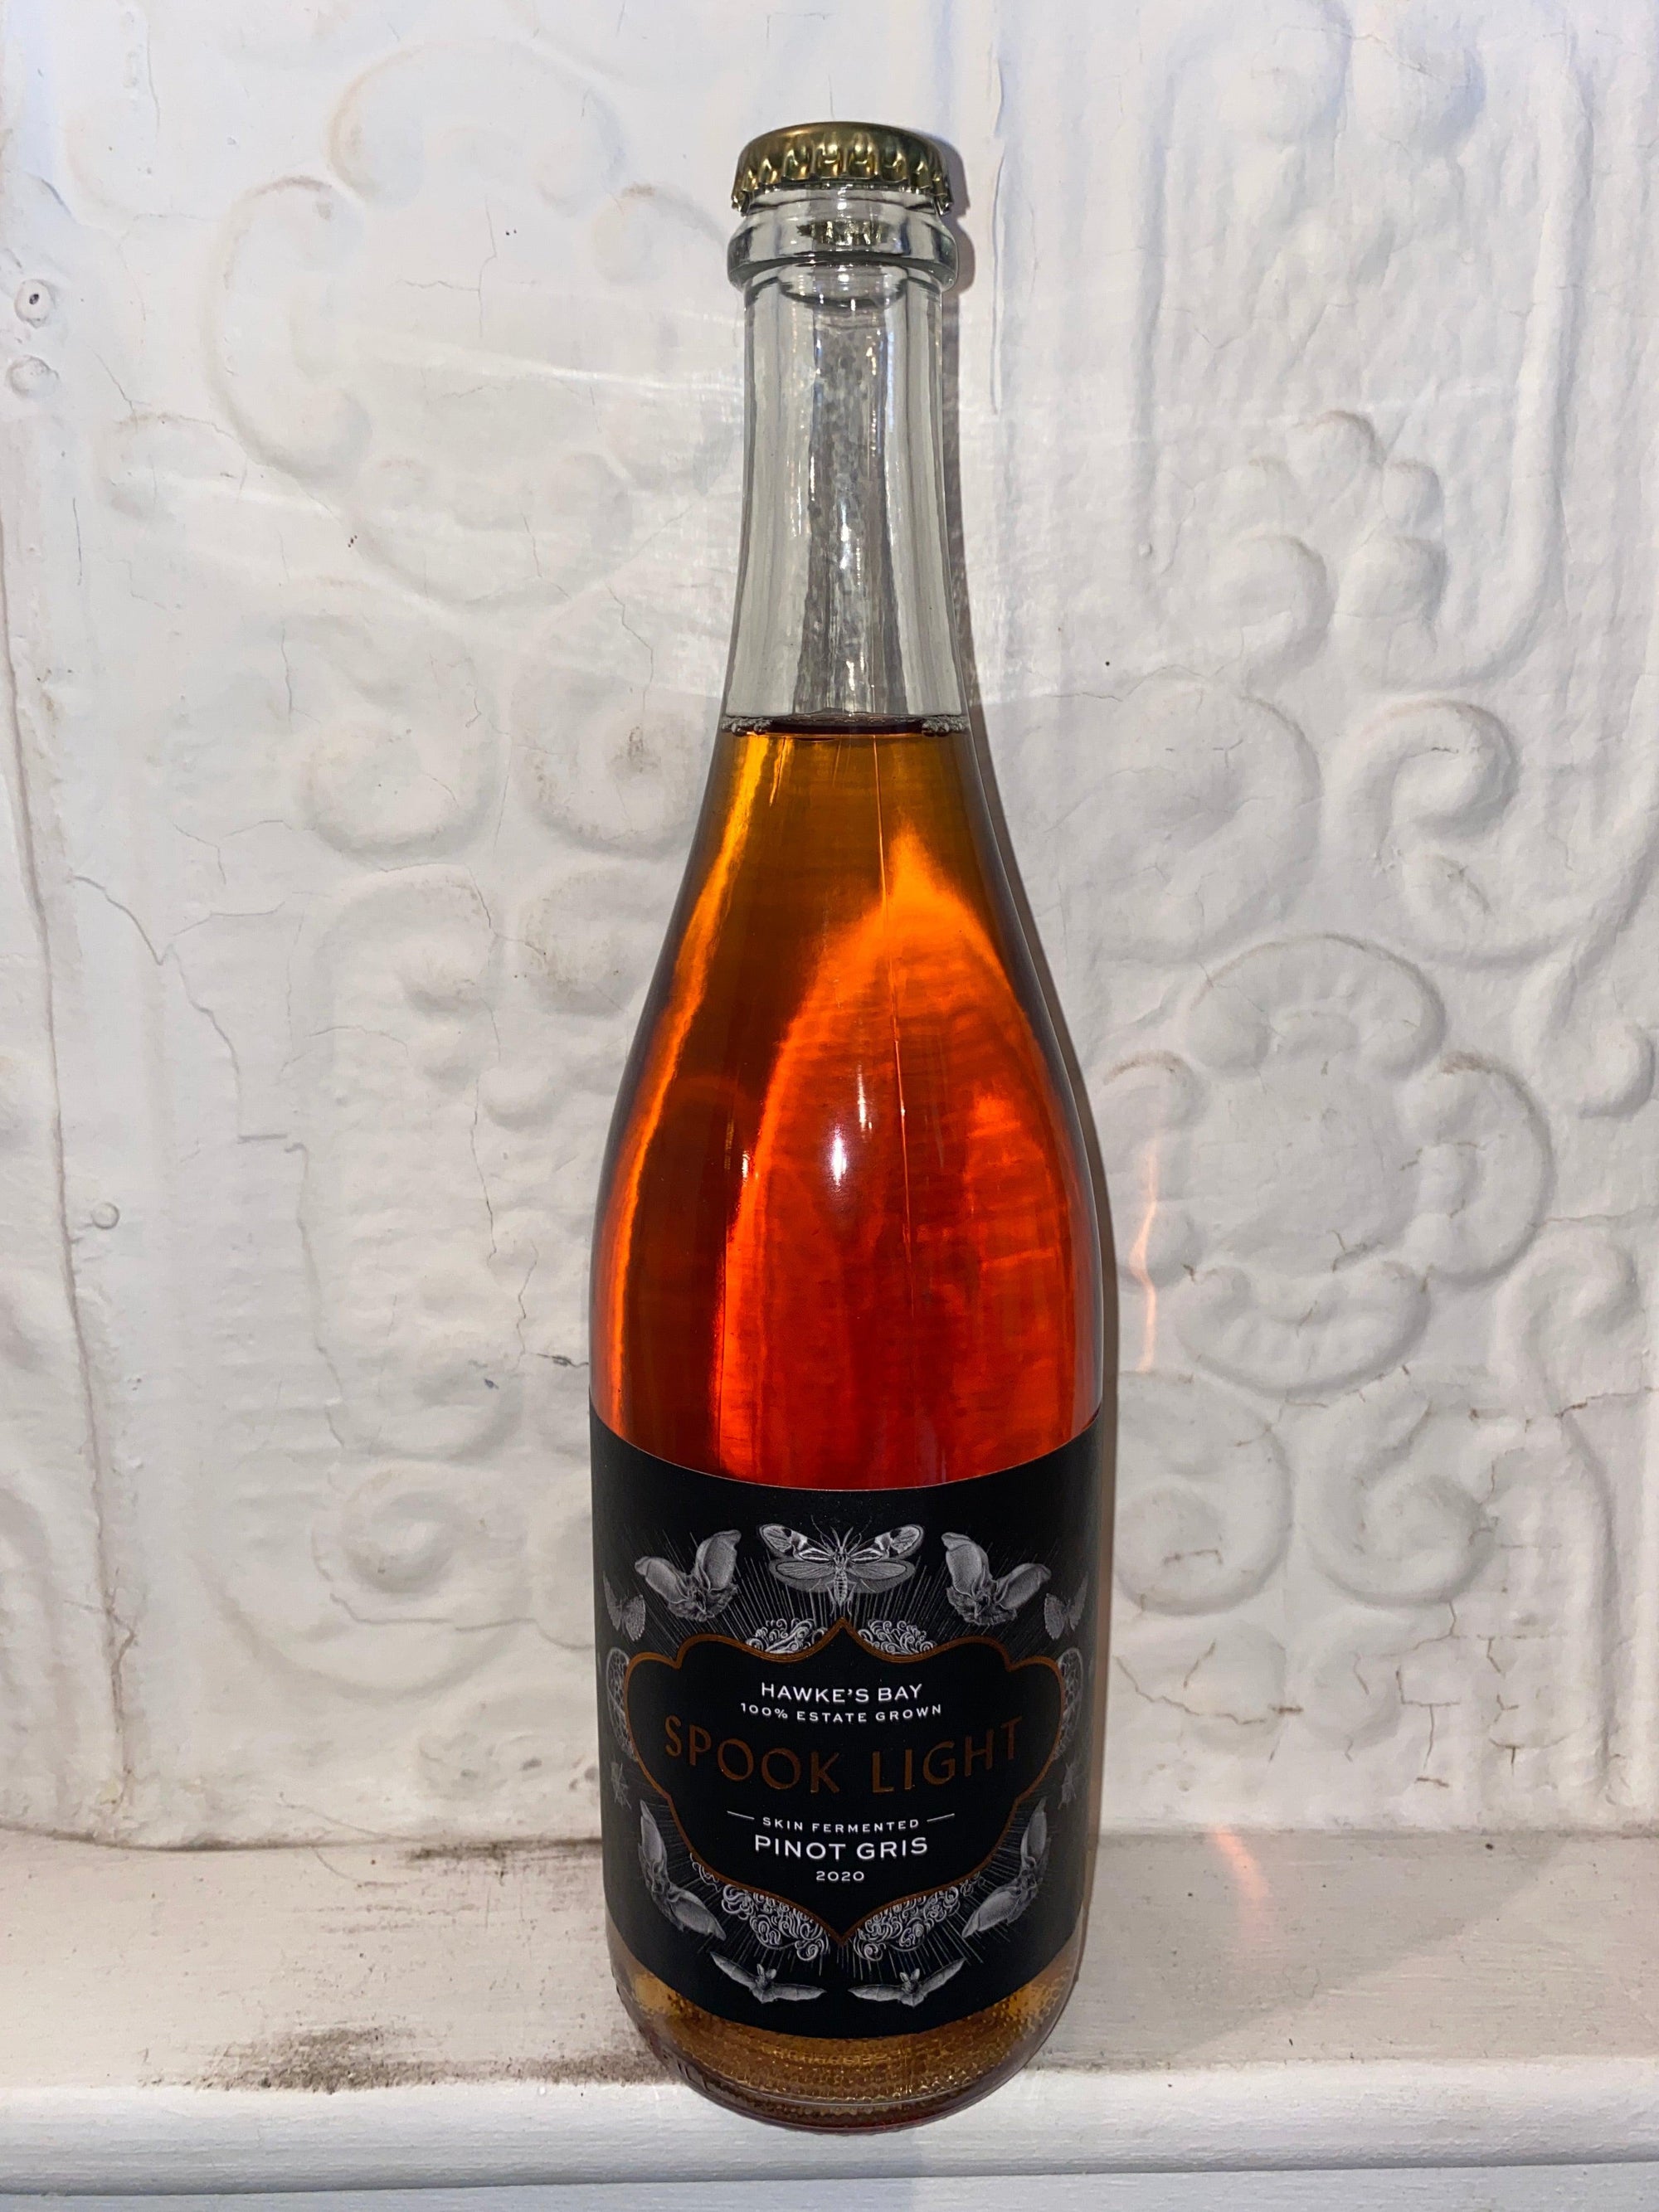 Spook Light Pinot Gris, Supernatural Wine Co. 2019 (Hawkes Bay, New Zealand)-Wine-Bibber & Bell